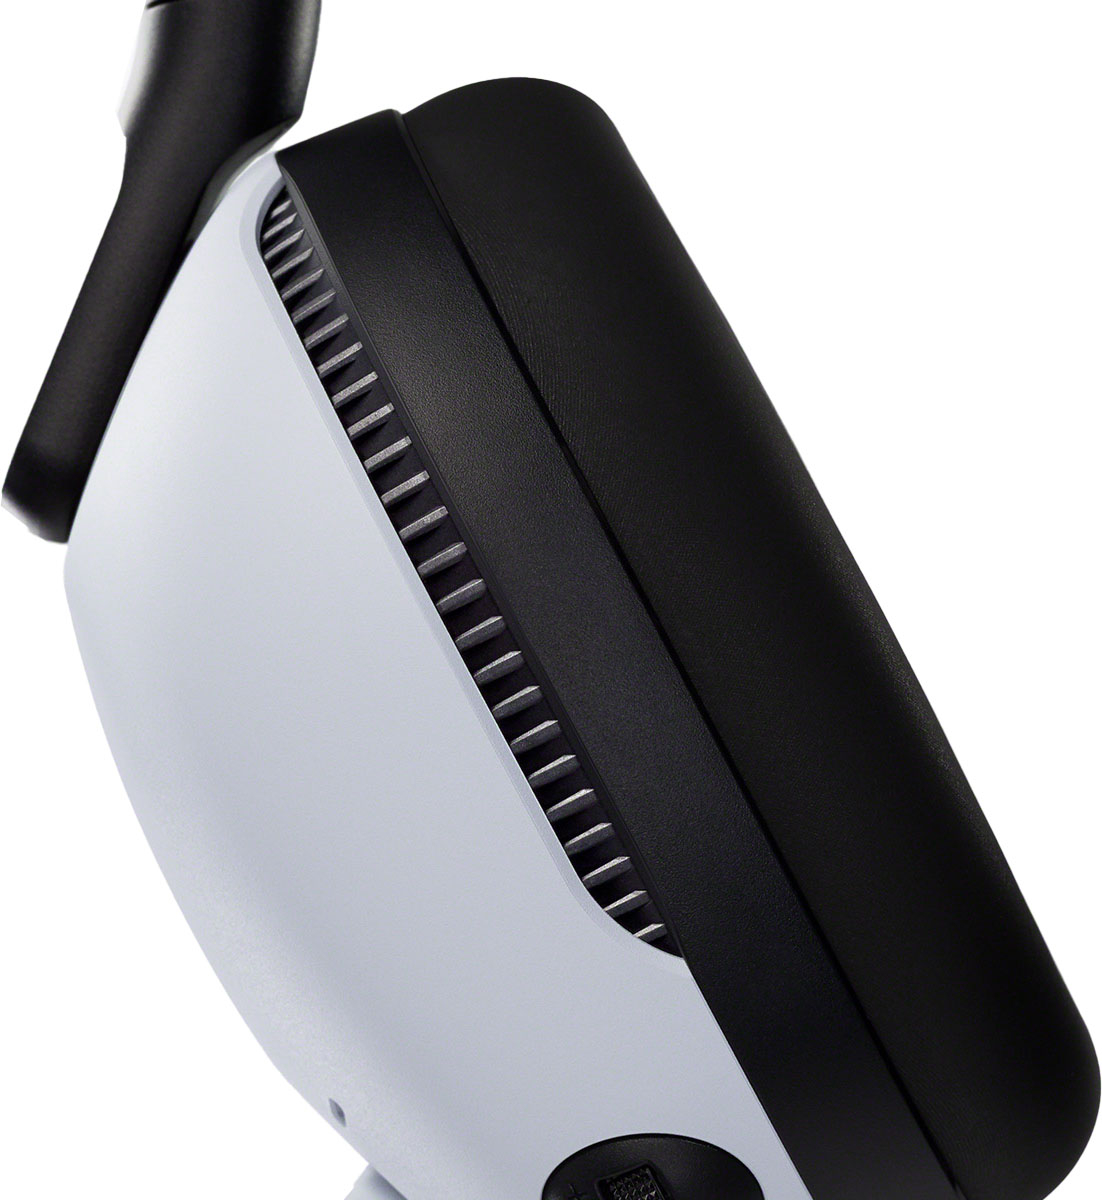 Sony INZONE H9 Wireless Best - Buy Canceling Noise White WHG900N/W Gaming Headset